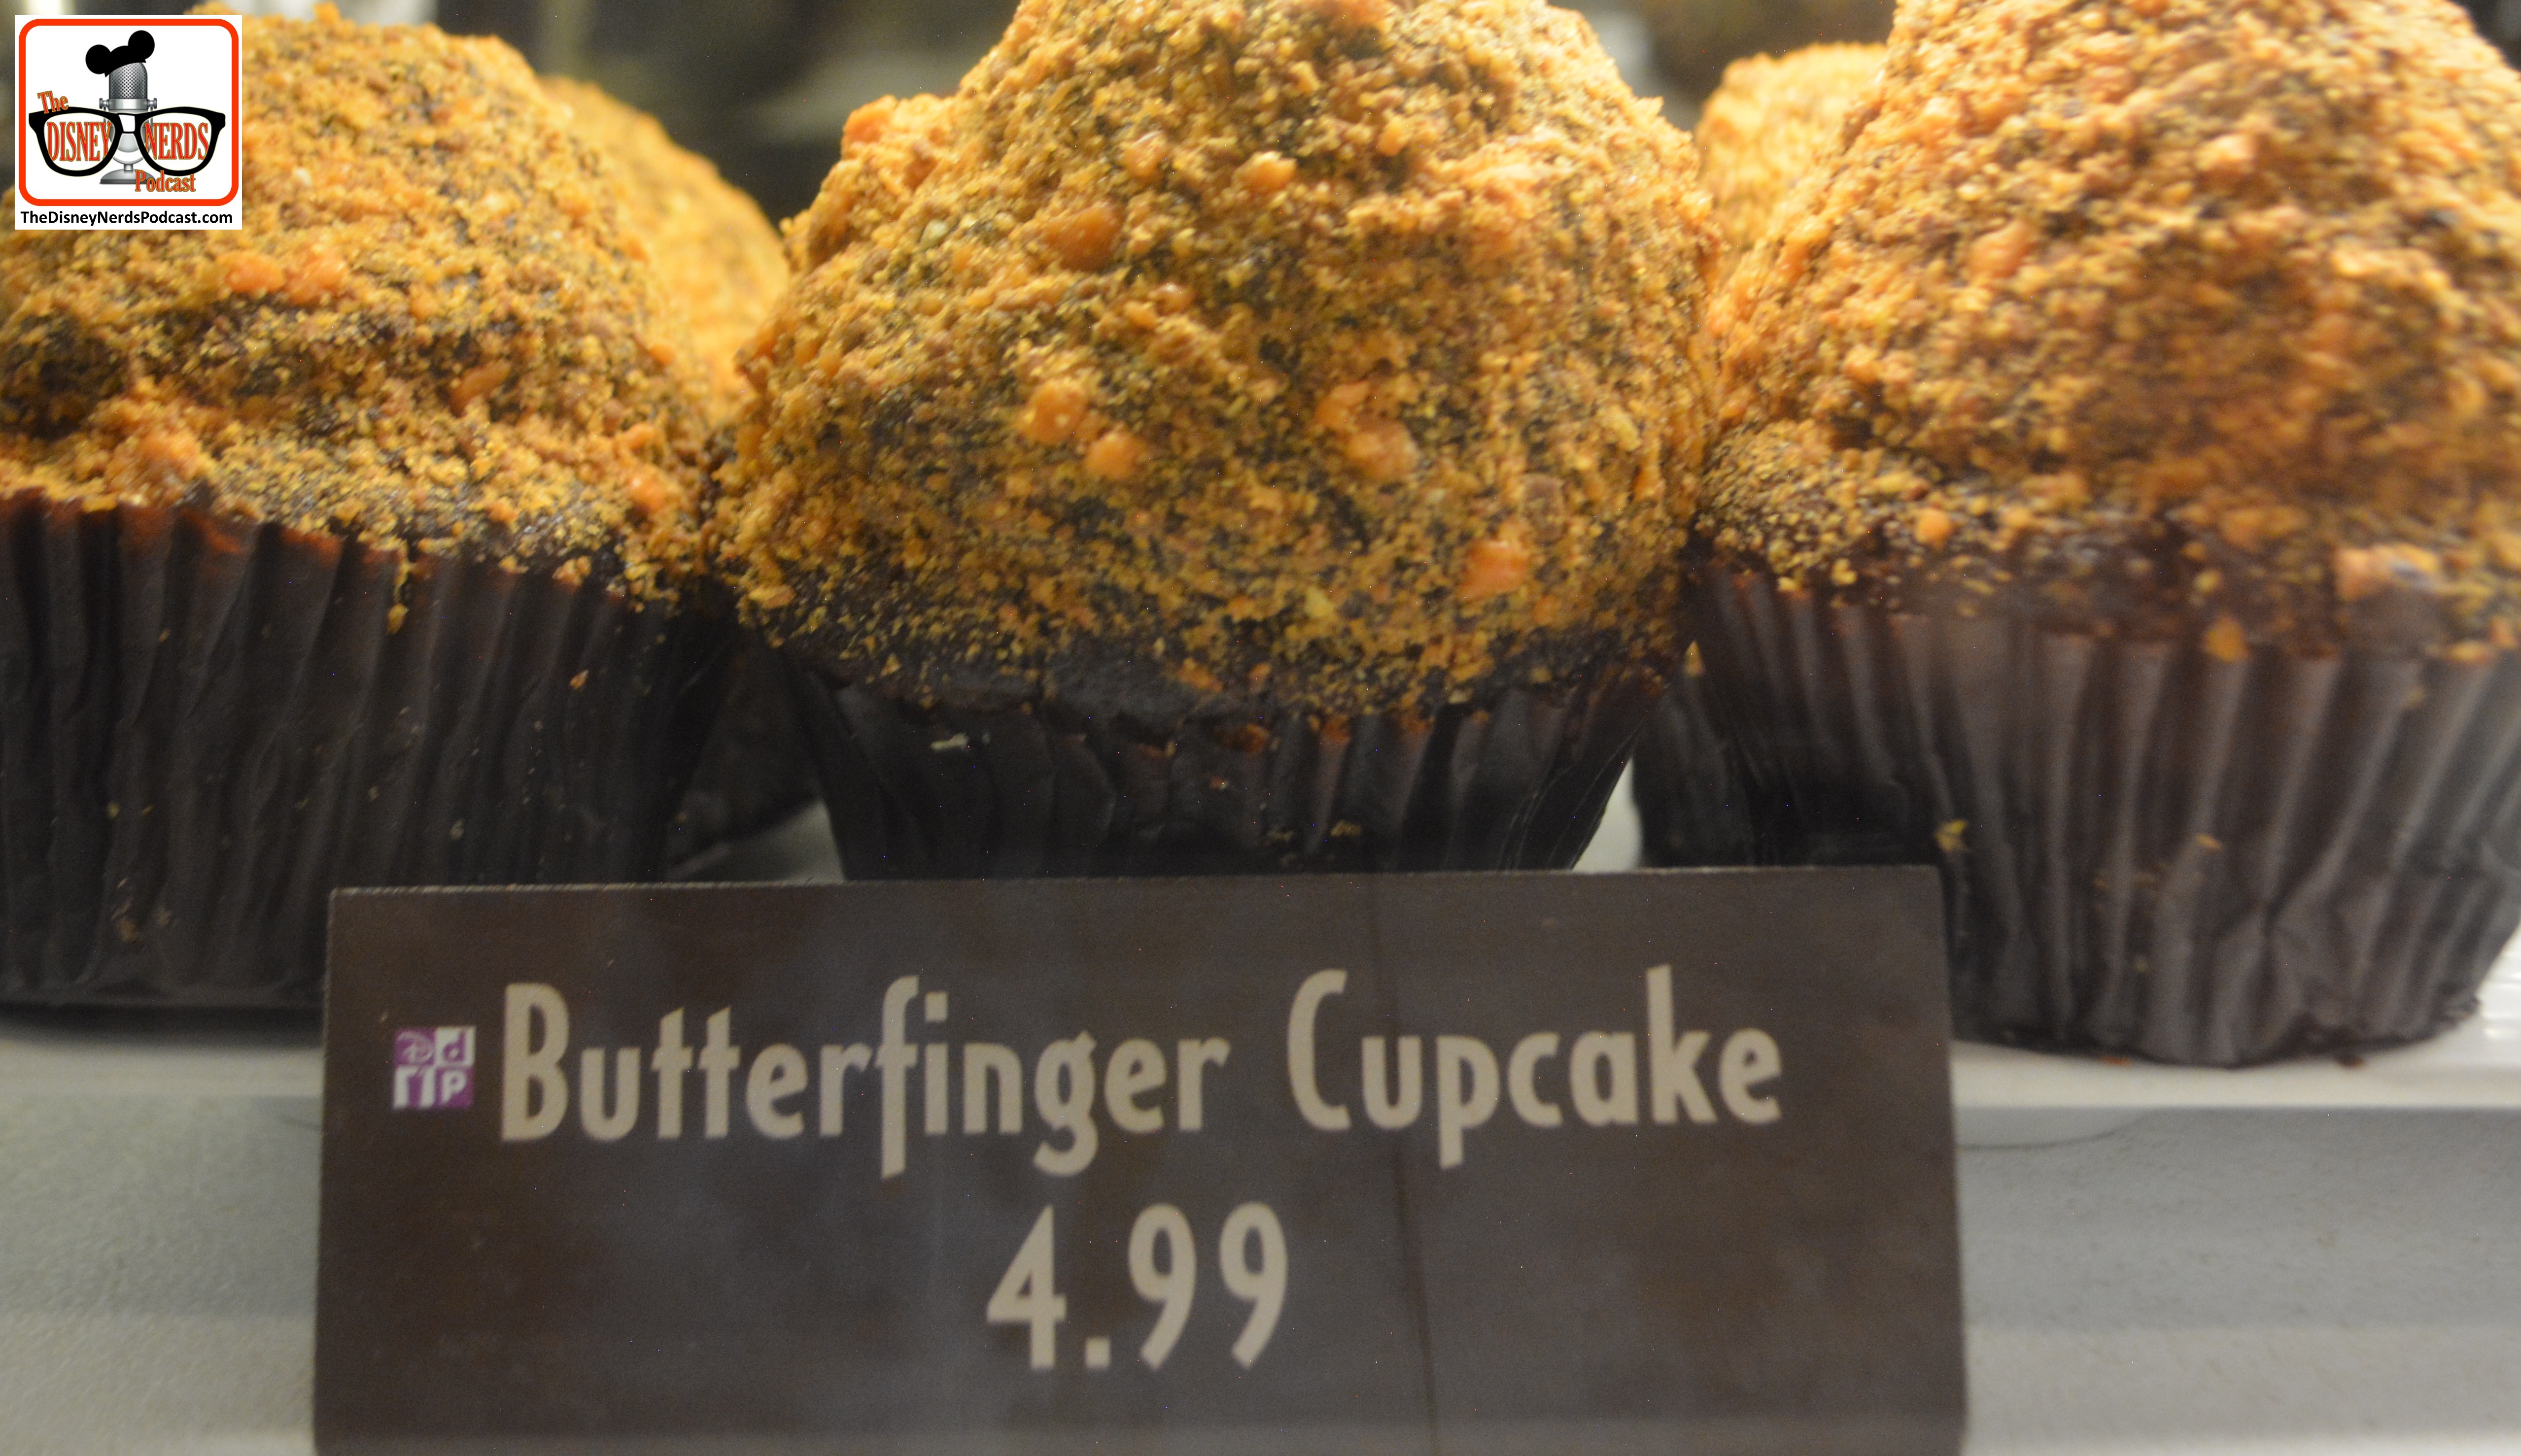 Hollywood studios Butter-finger Cupcake.